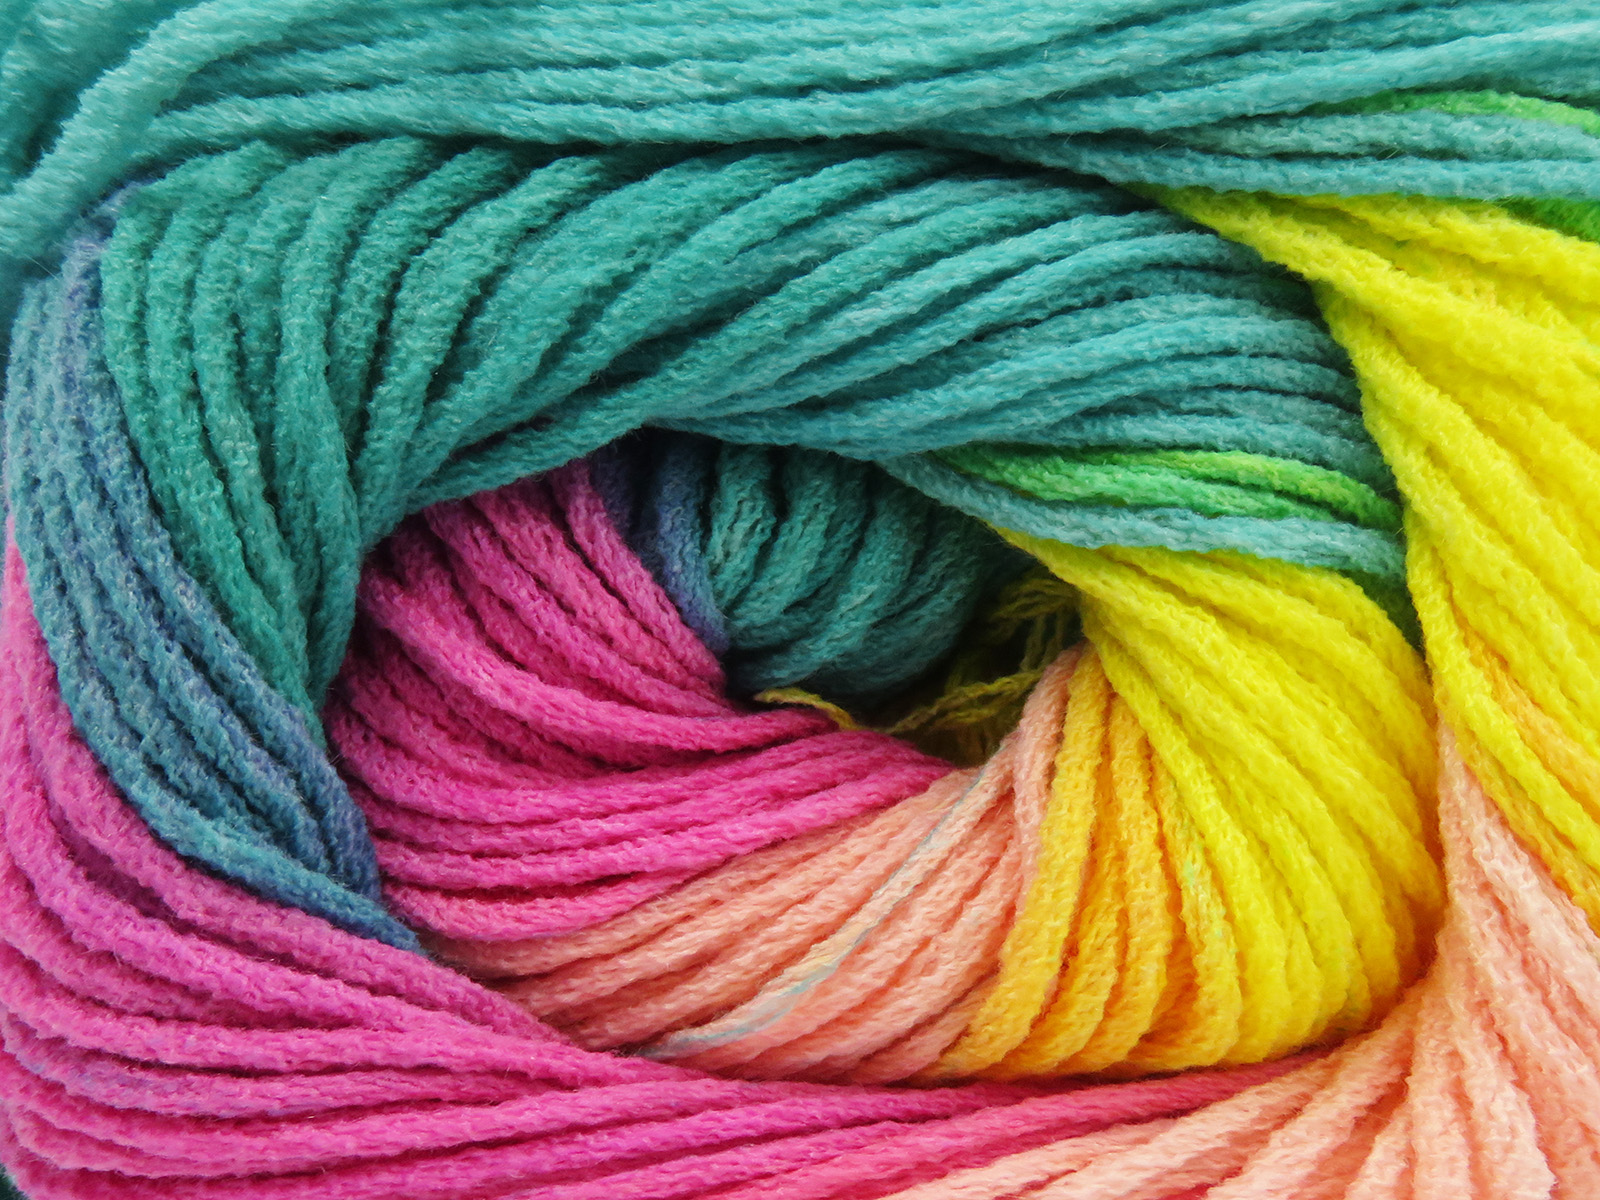 Magic Sock by Ice Yarns, Washable Wool, Self striping yarn